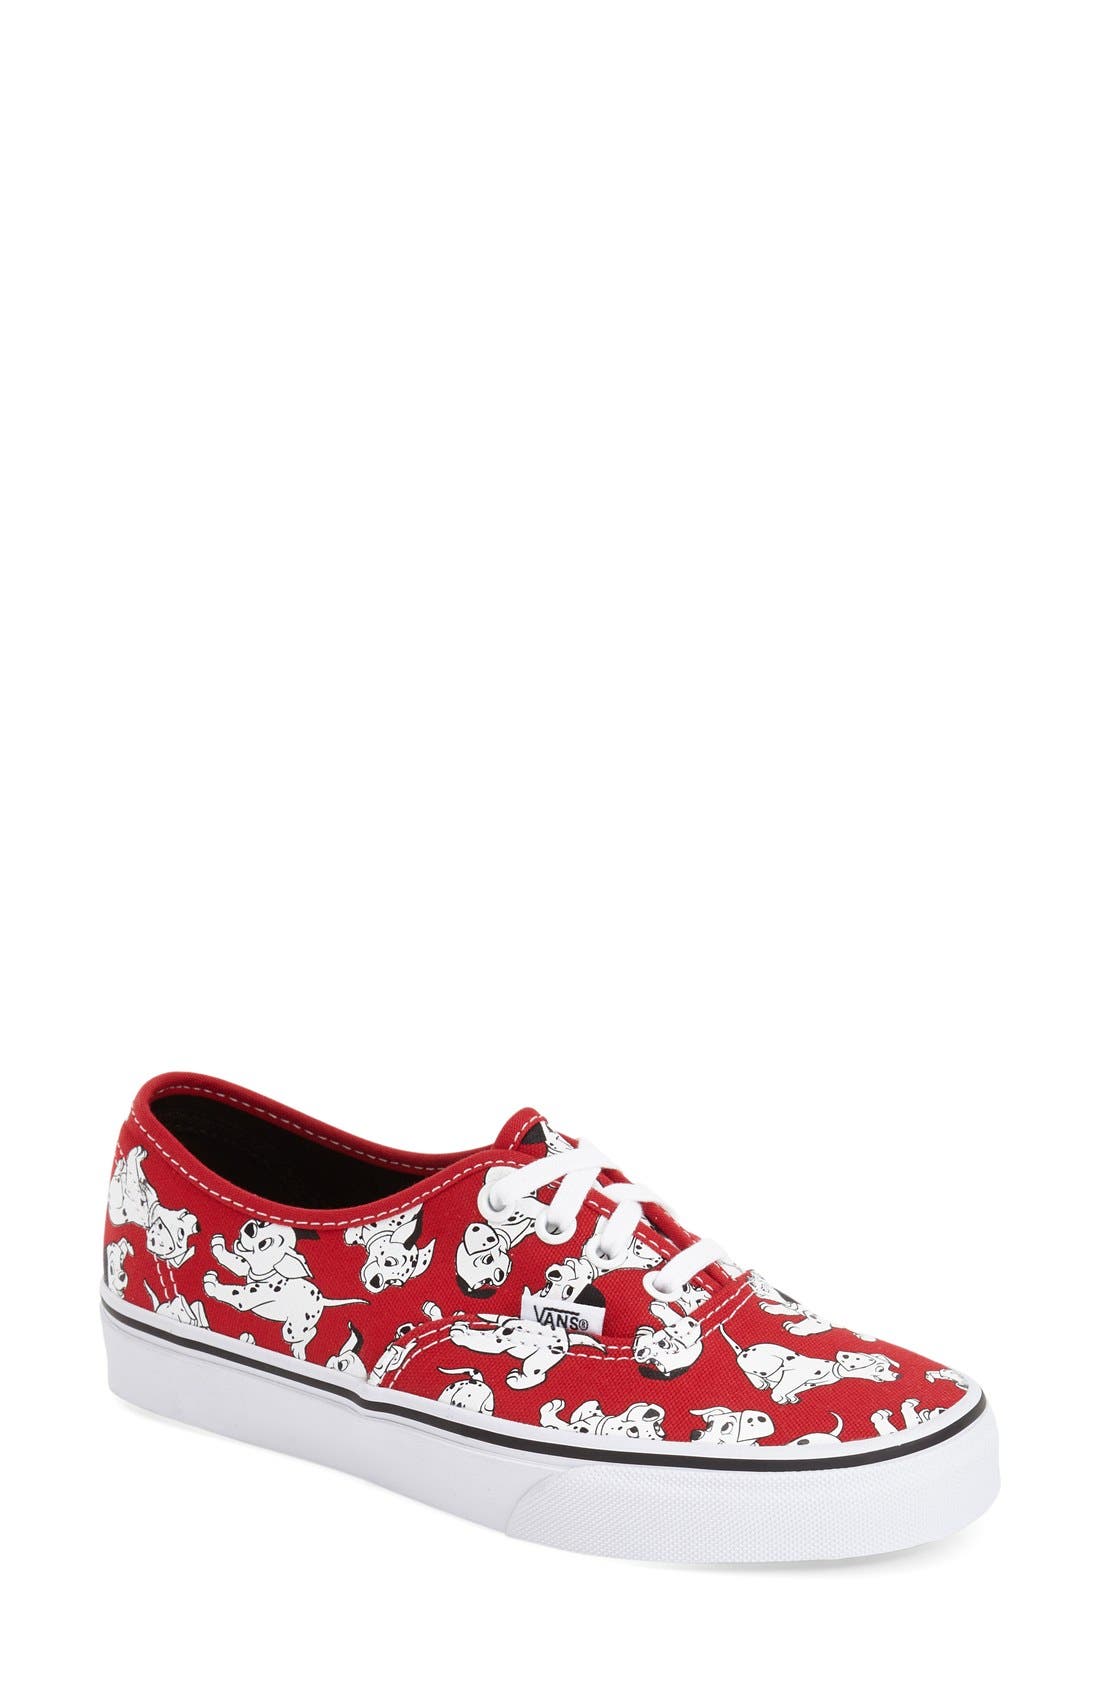 101 dalmatians vans shoes